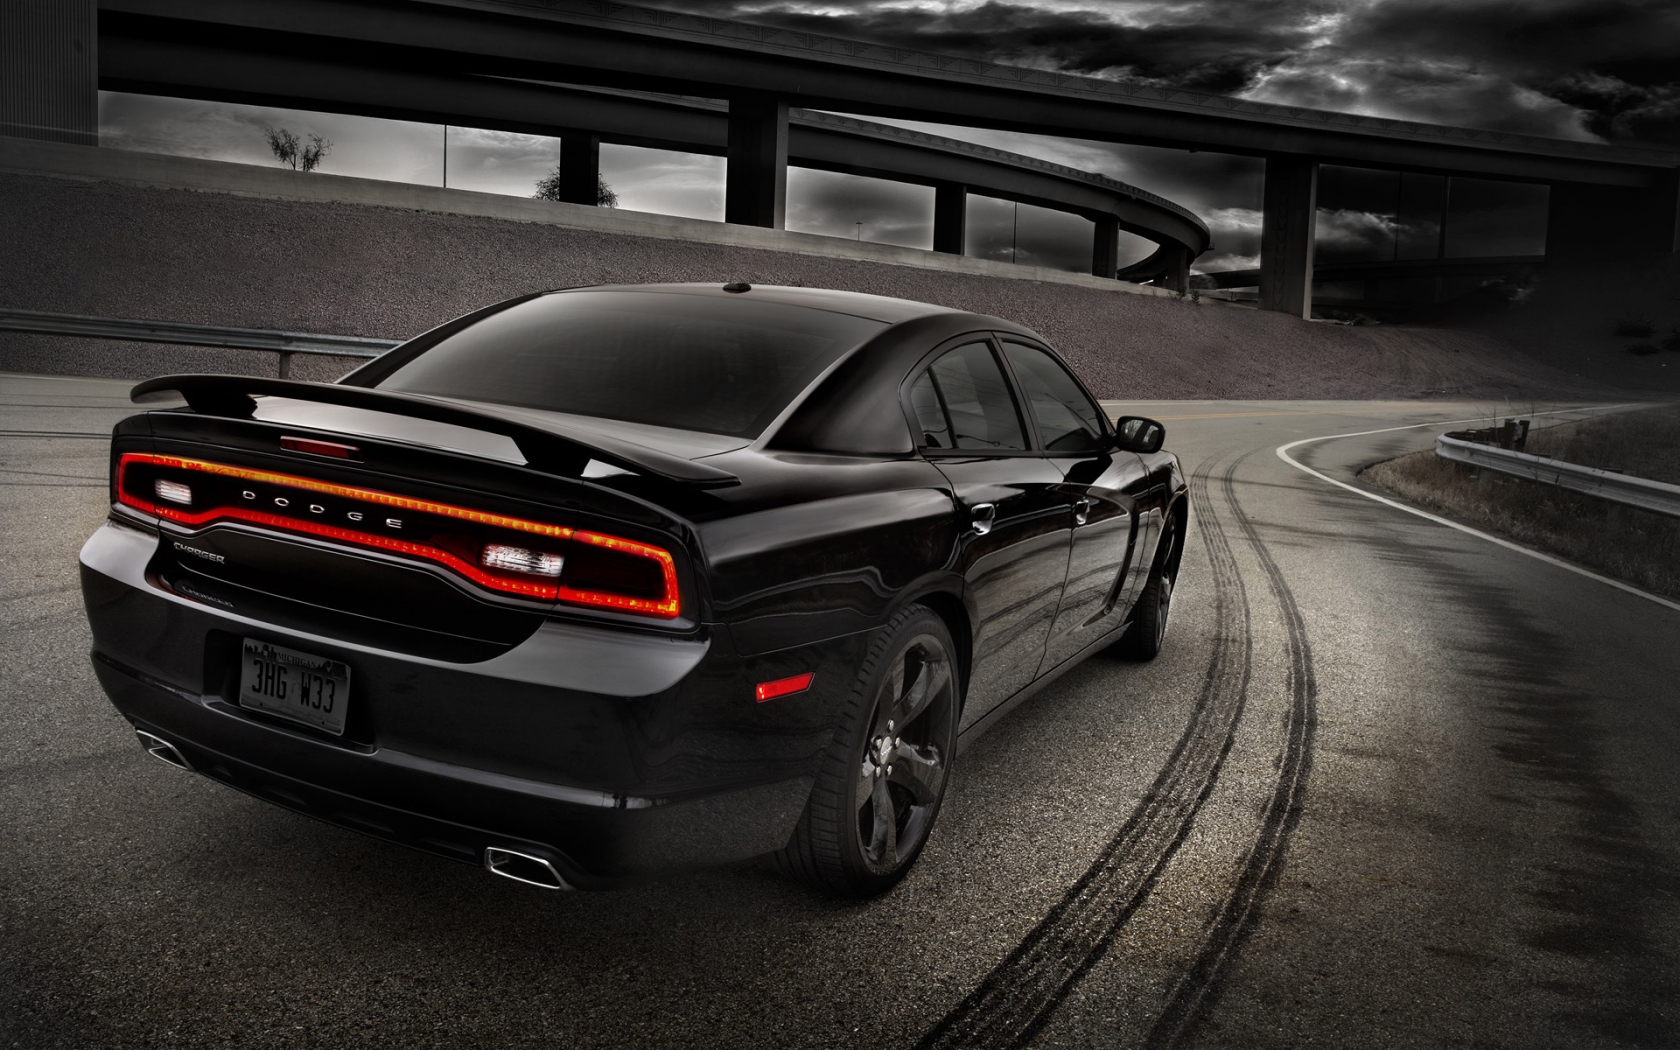 Dodge Blacktop Rear for 1680 x 1050 widescreen resolution